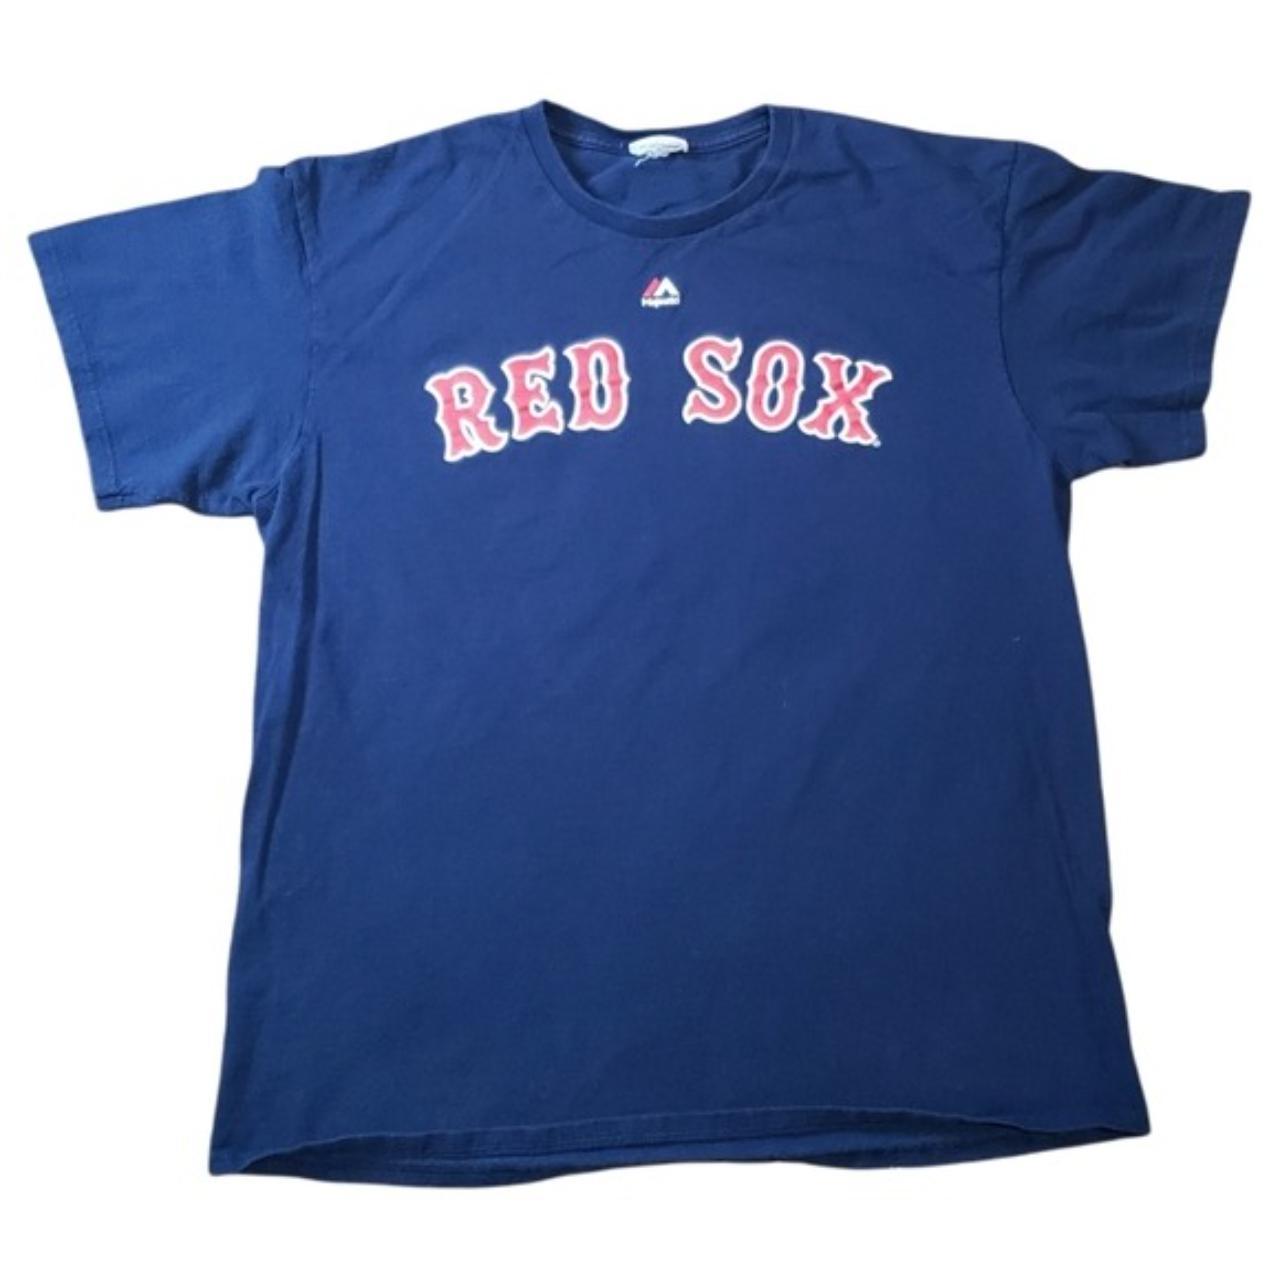 Boston Red Sox Shirt Navy Blue 1B/OF Hanley Ramirez - Depop